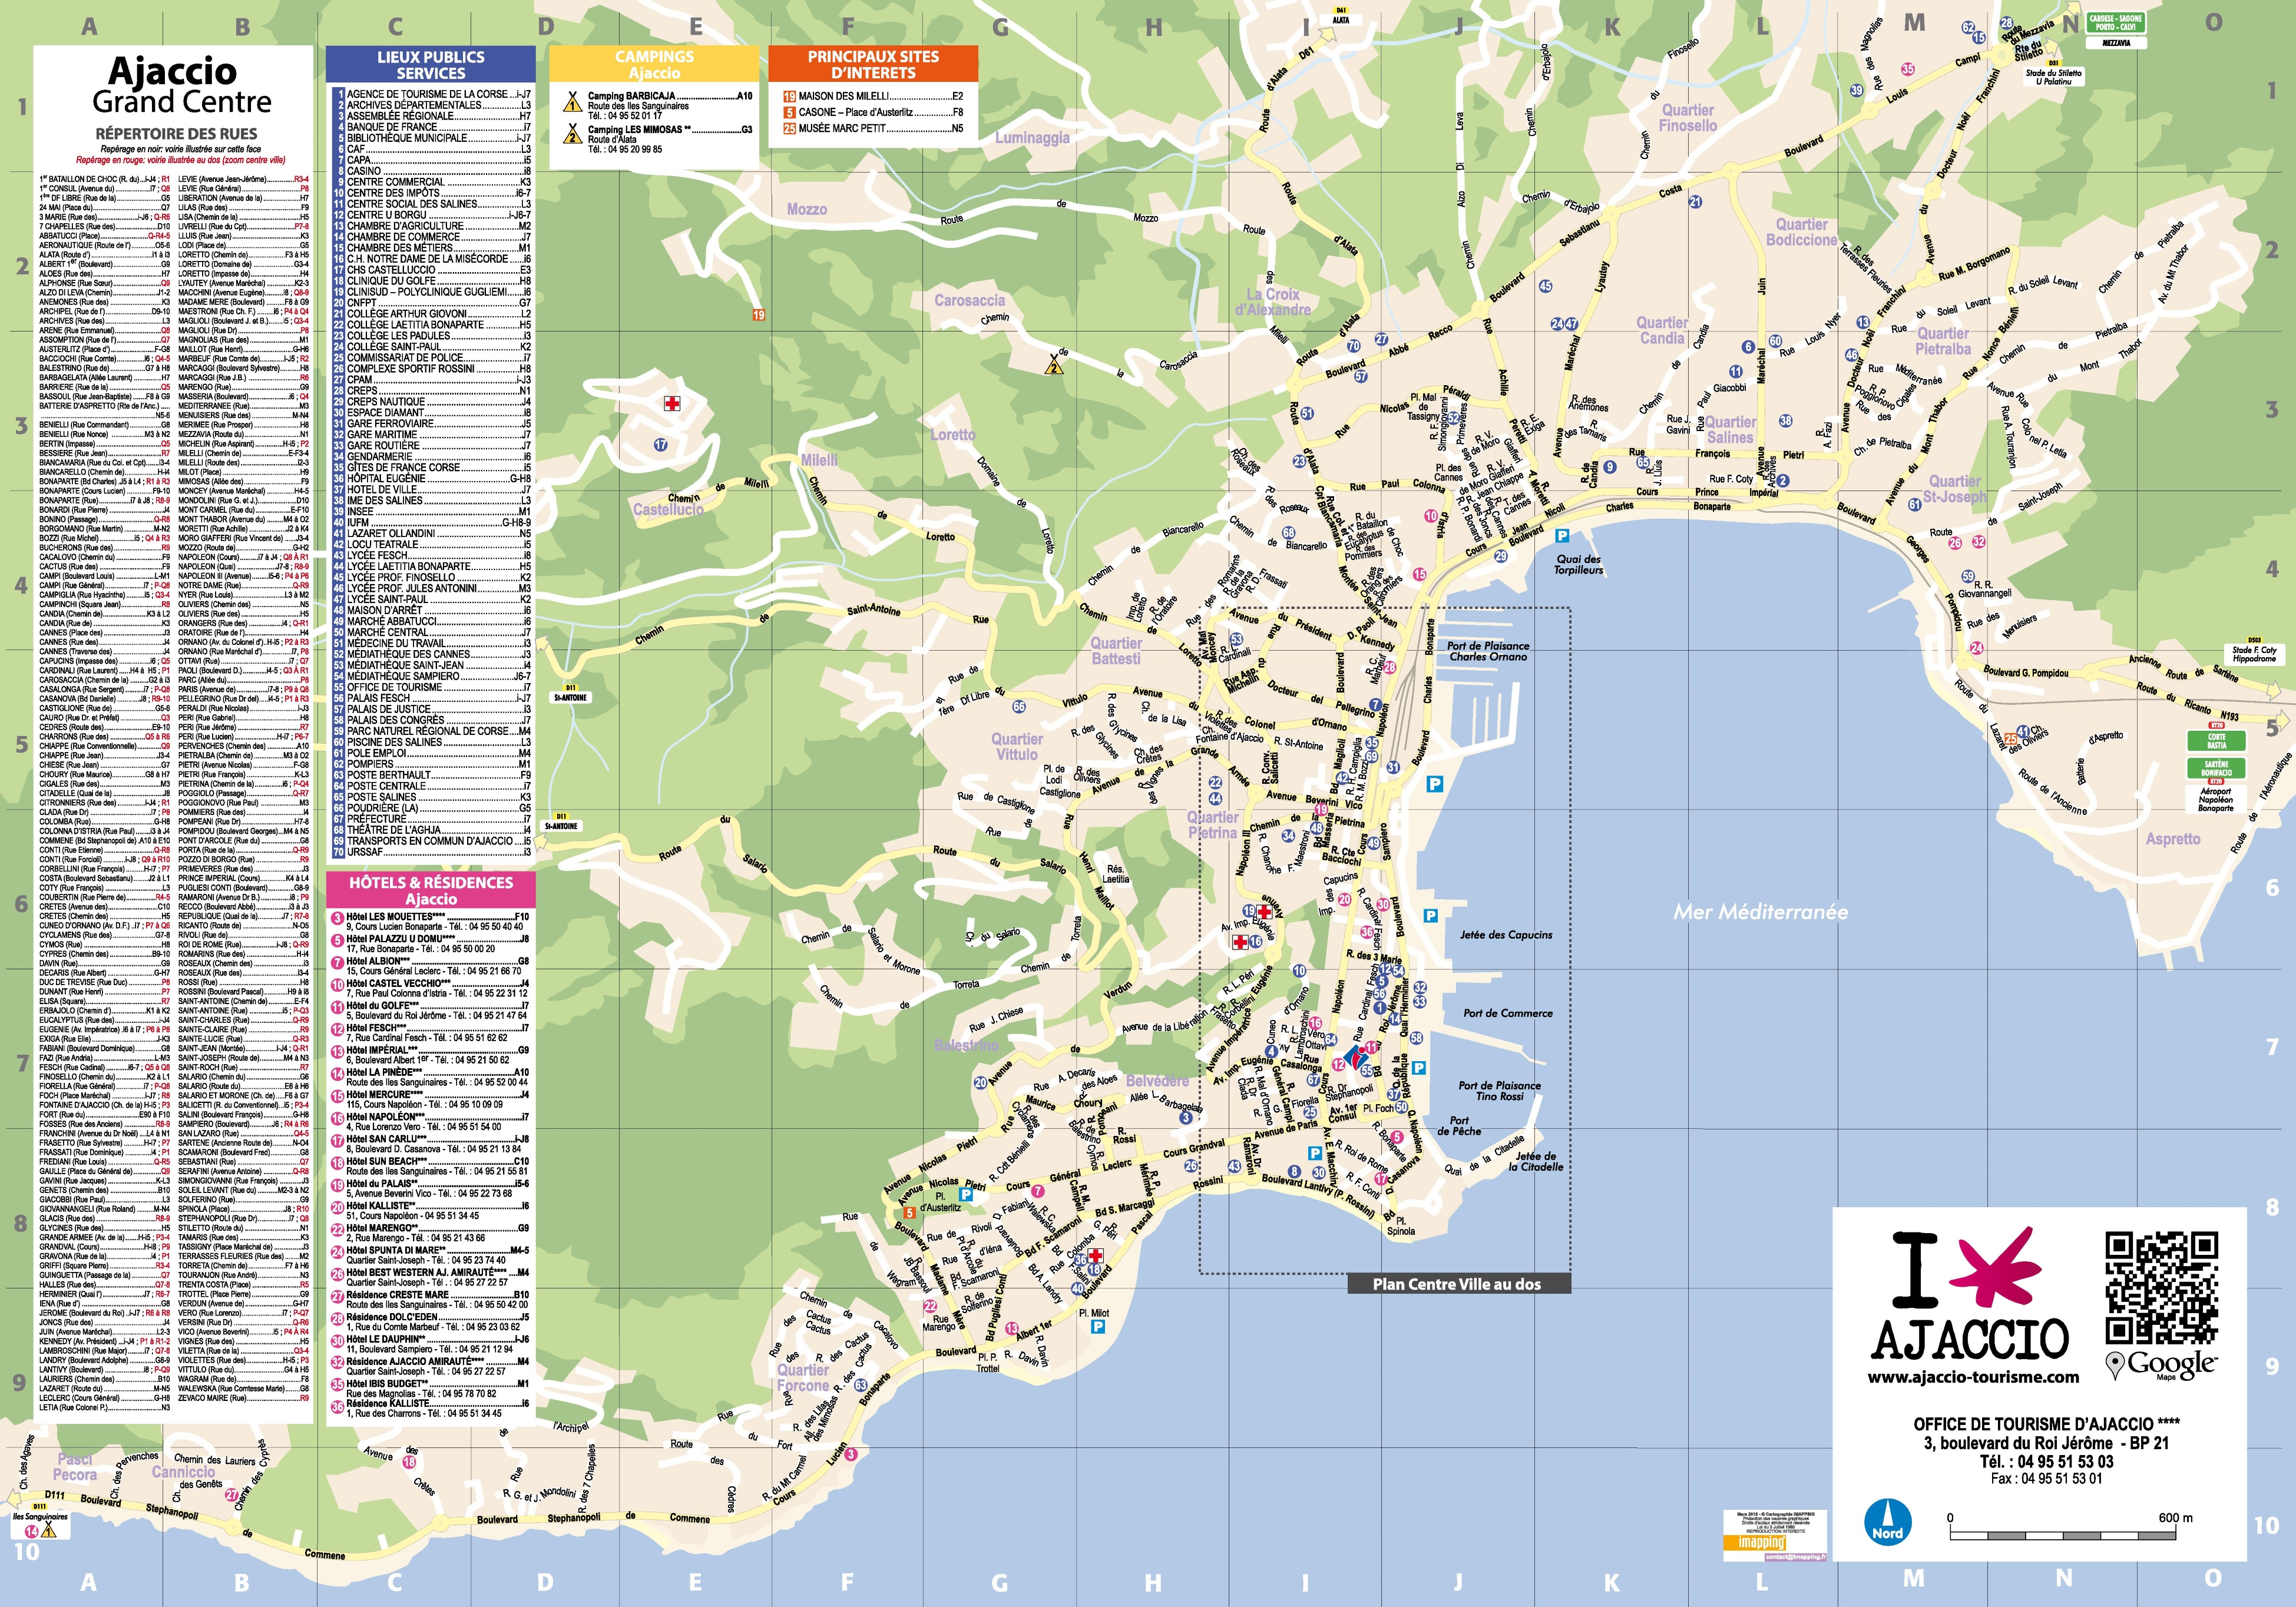 ajaccio-tourist-map.jpg